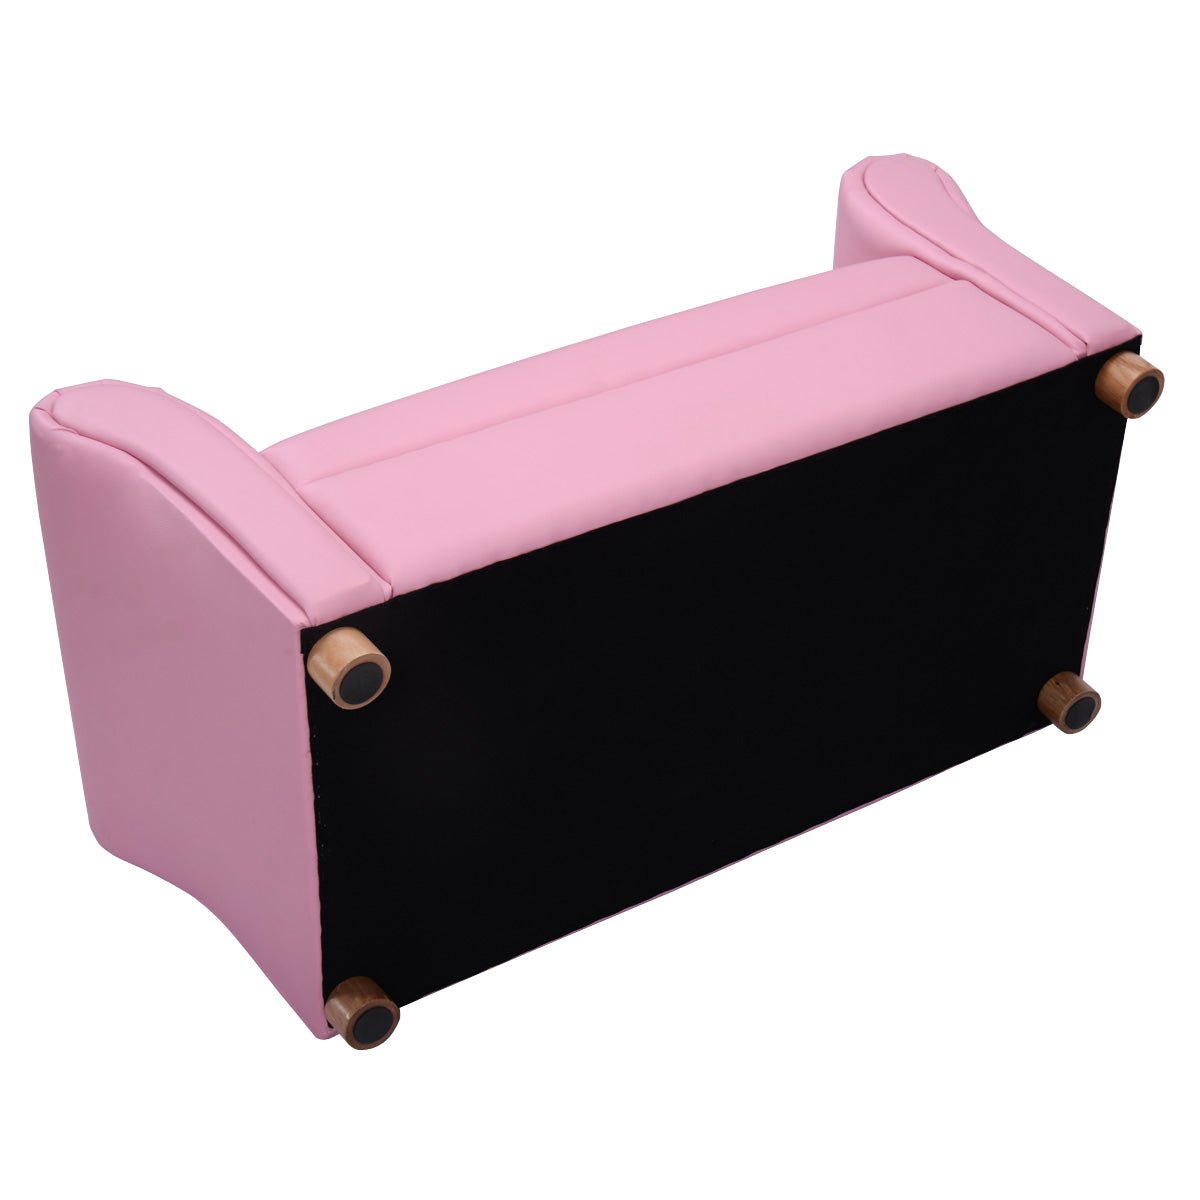 Children's Armrest Sofa Chair: PVC Leather, Relaxation Spot for Kids